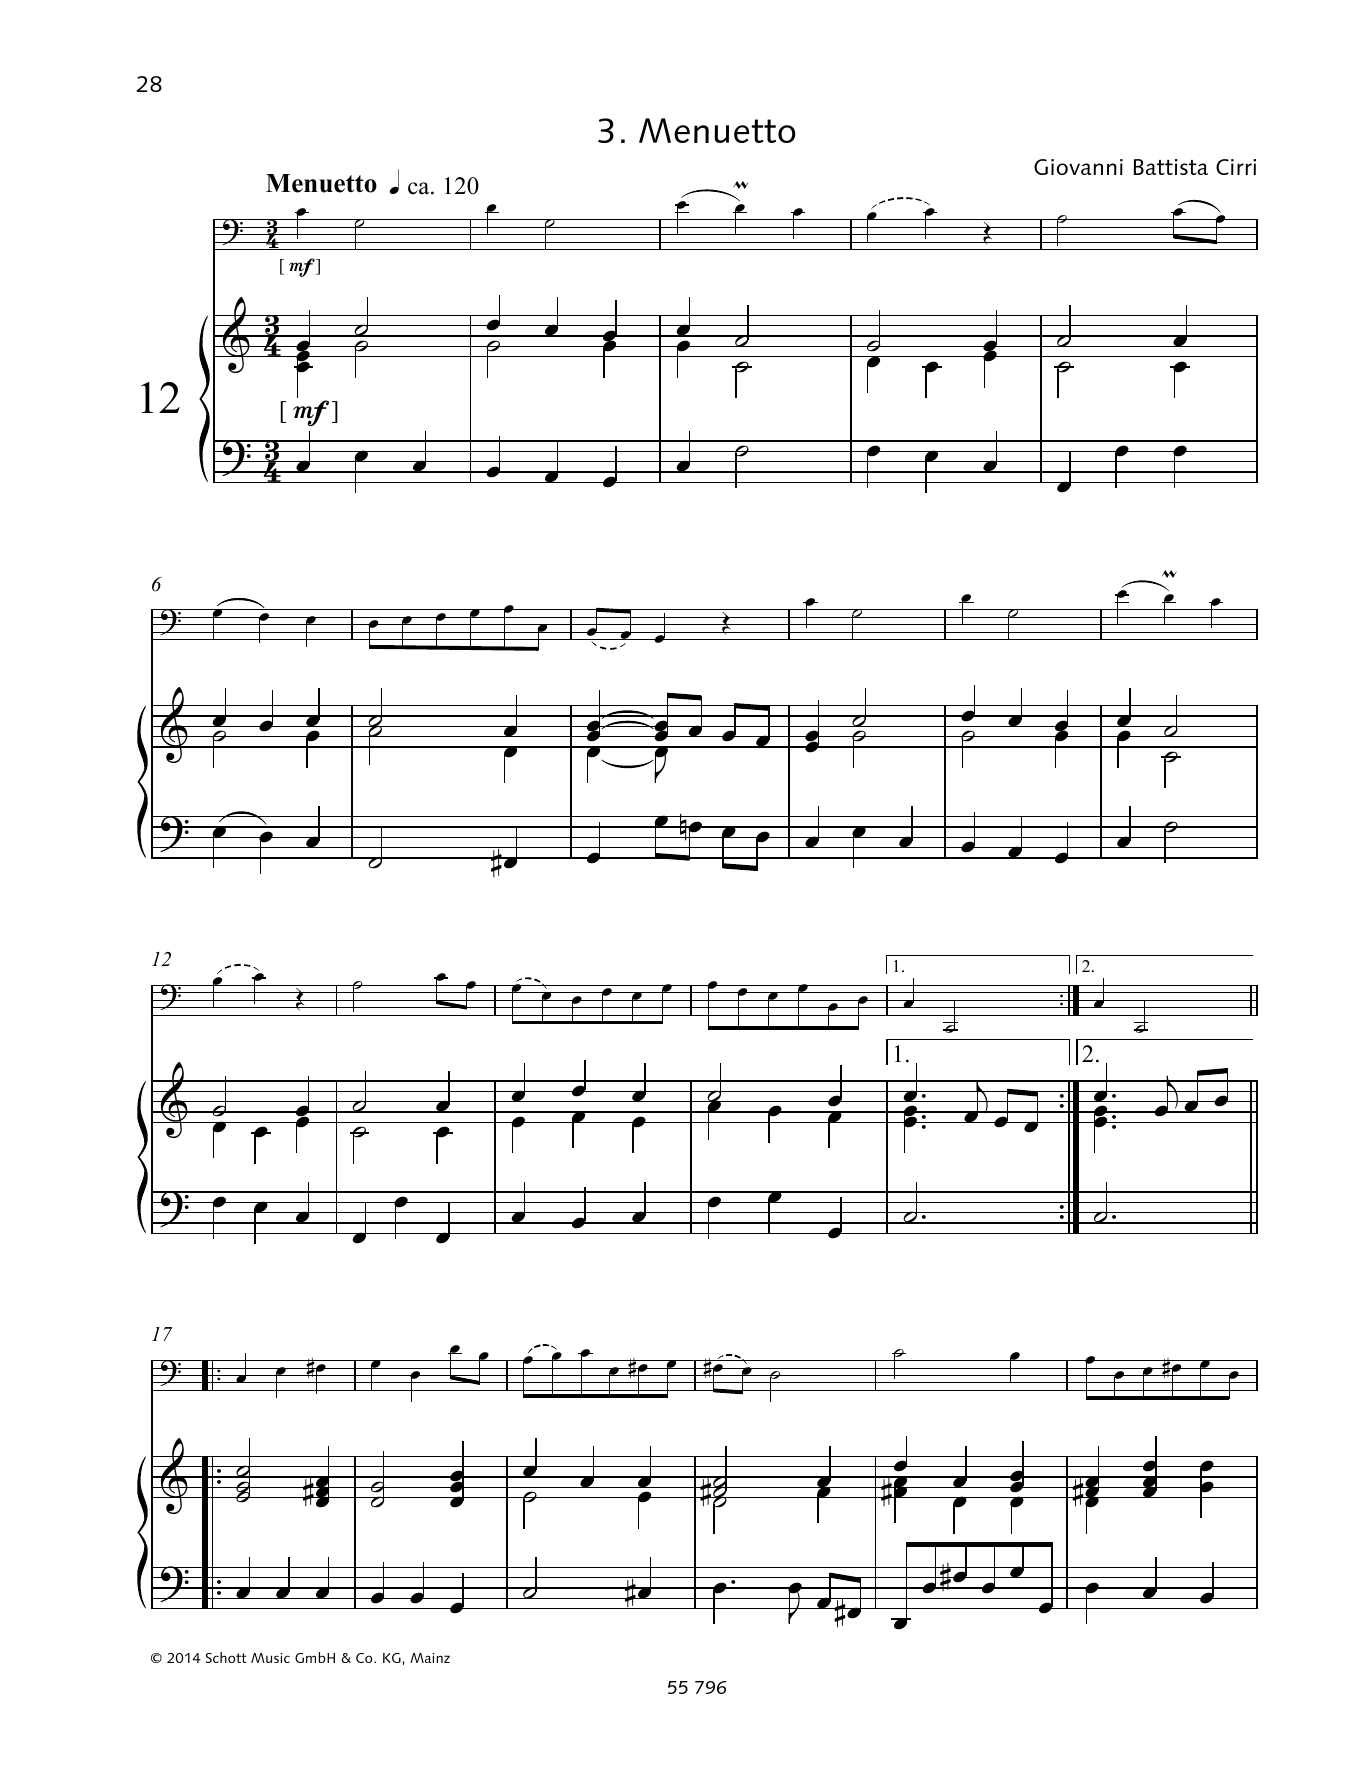 Giovanni Battista Cirri Menuetto Sheet Music Notes & Chords for String Solo - Download or Print PDF